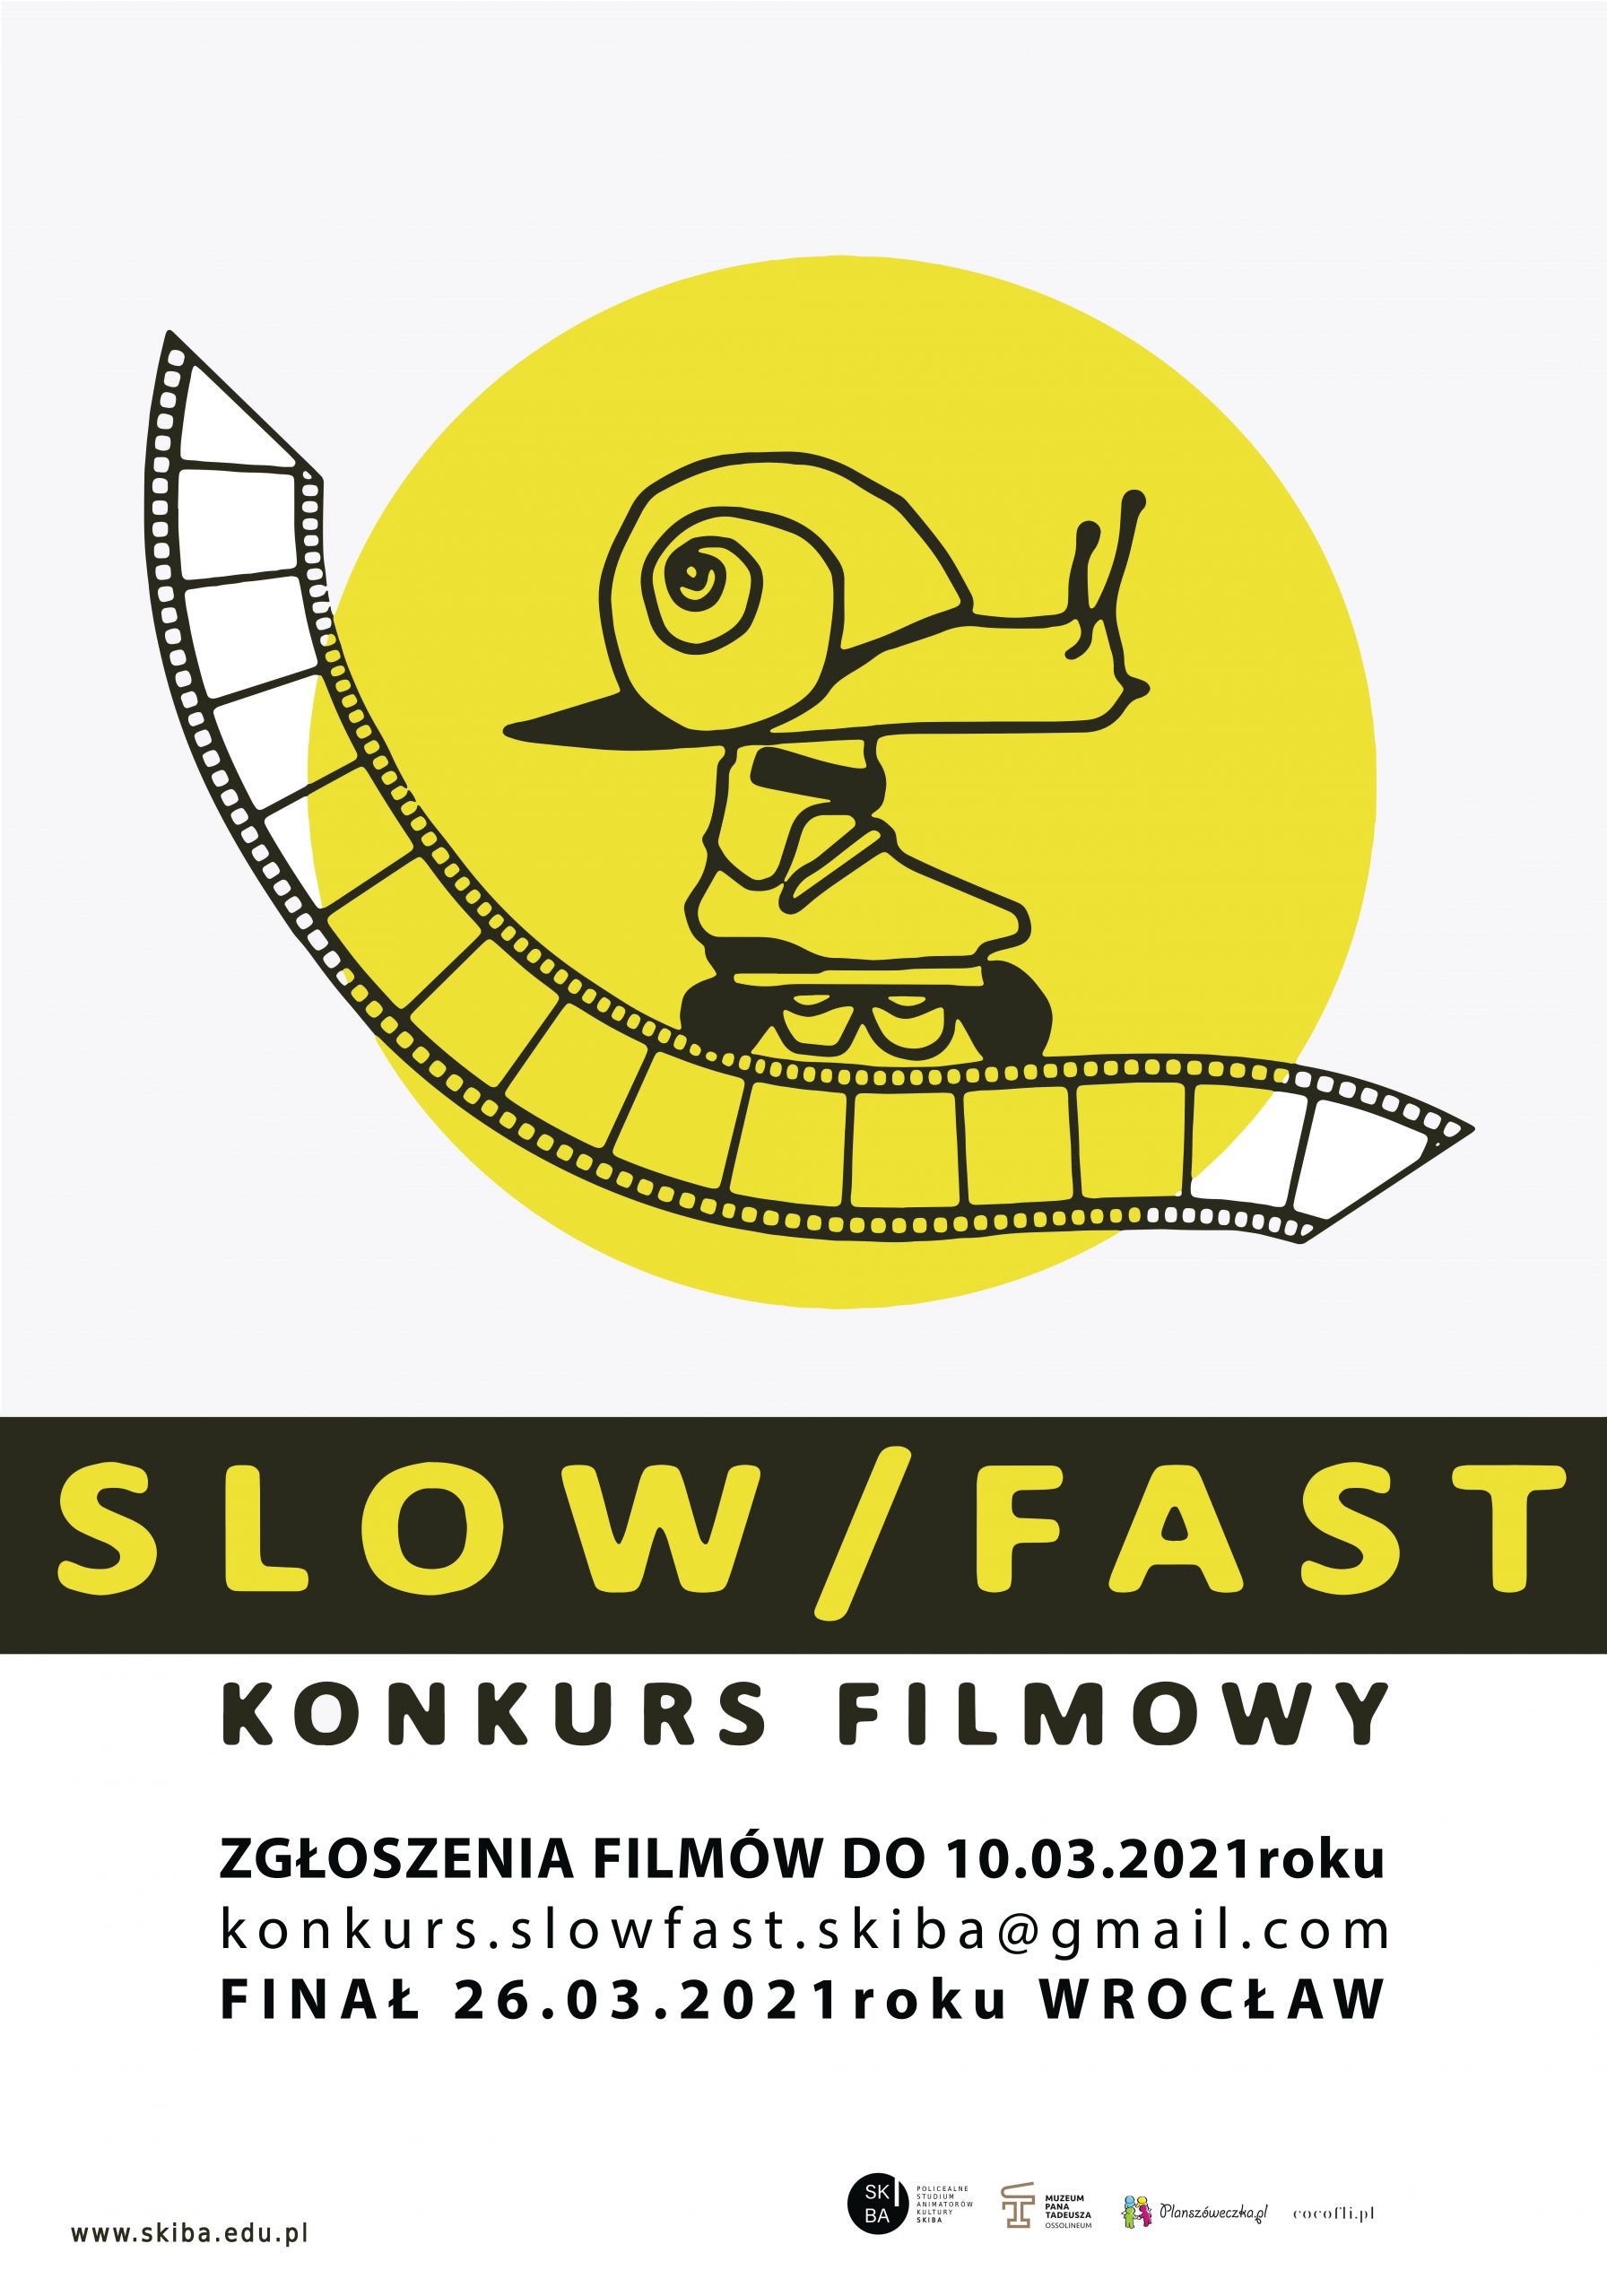 Konkurs filmowy „Slow/Fast”